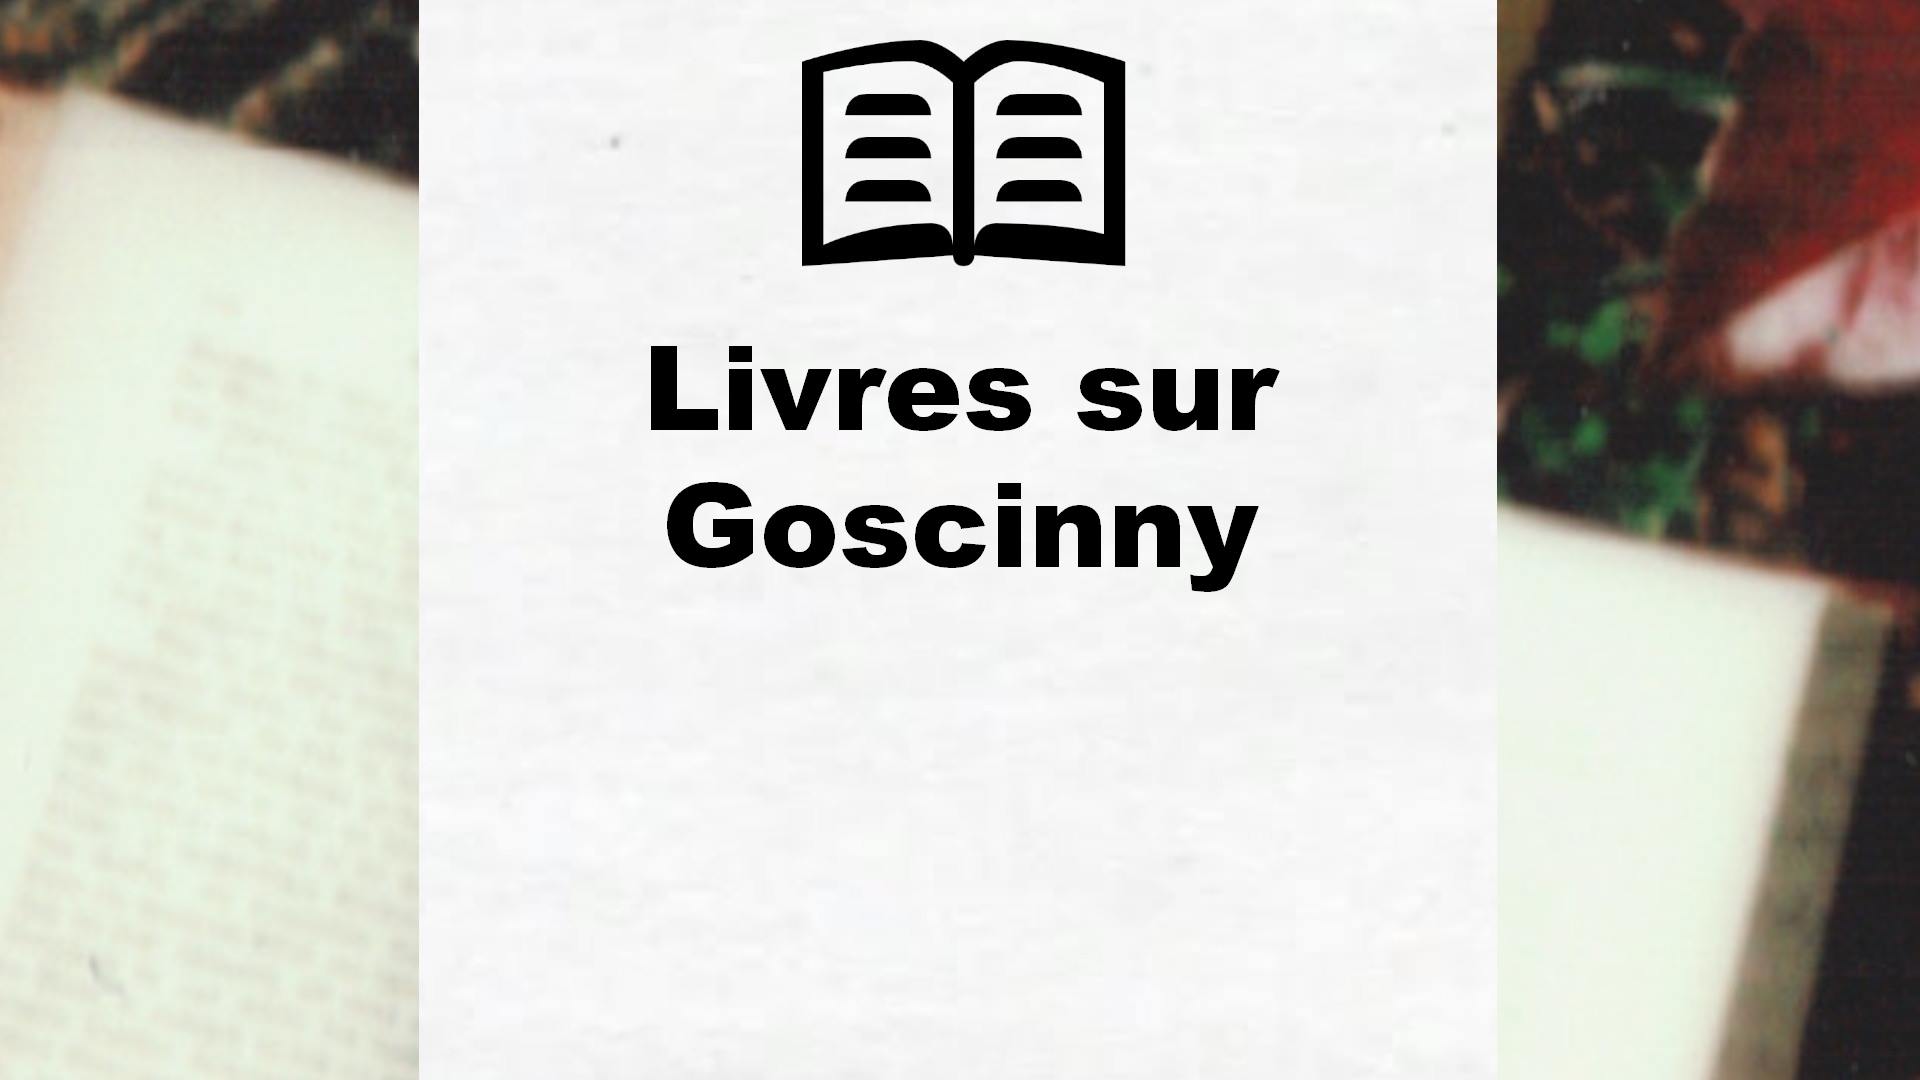 Livres sur Goscinny